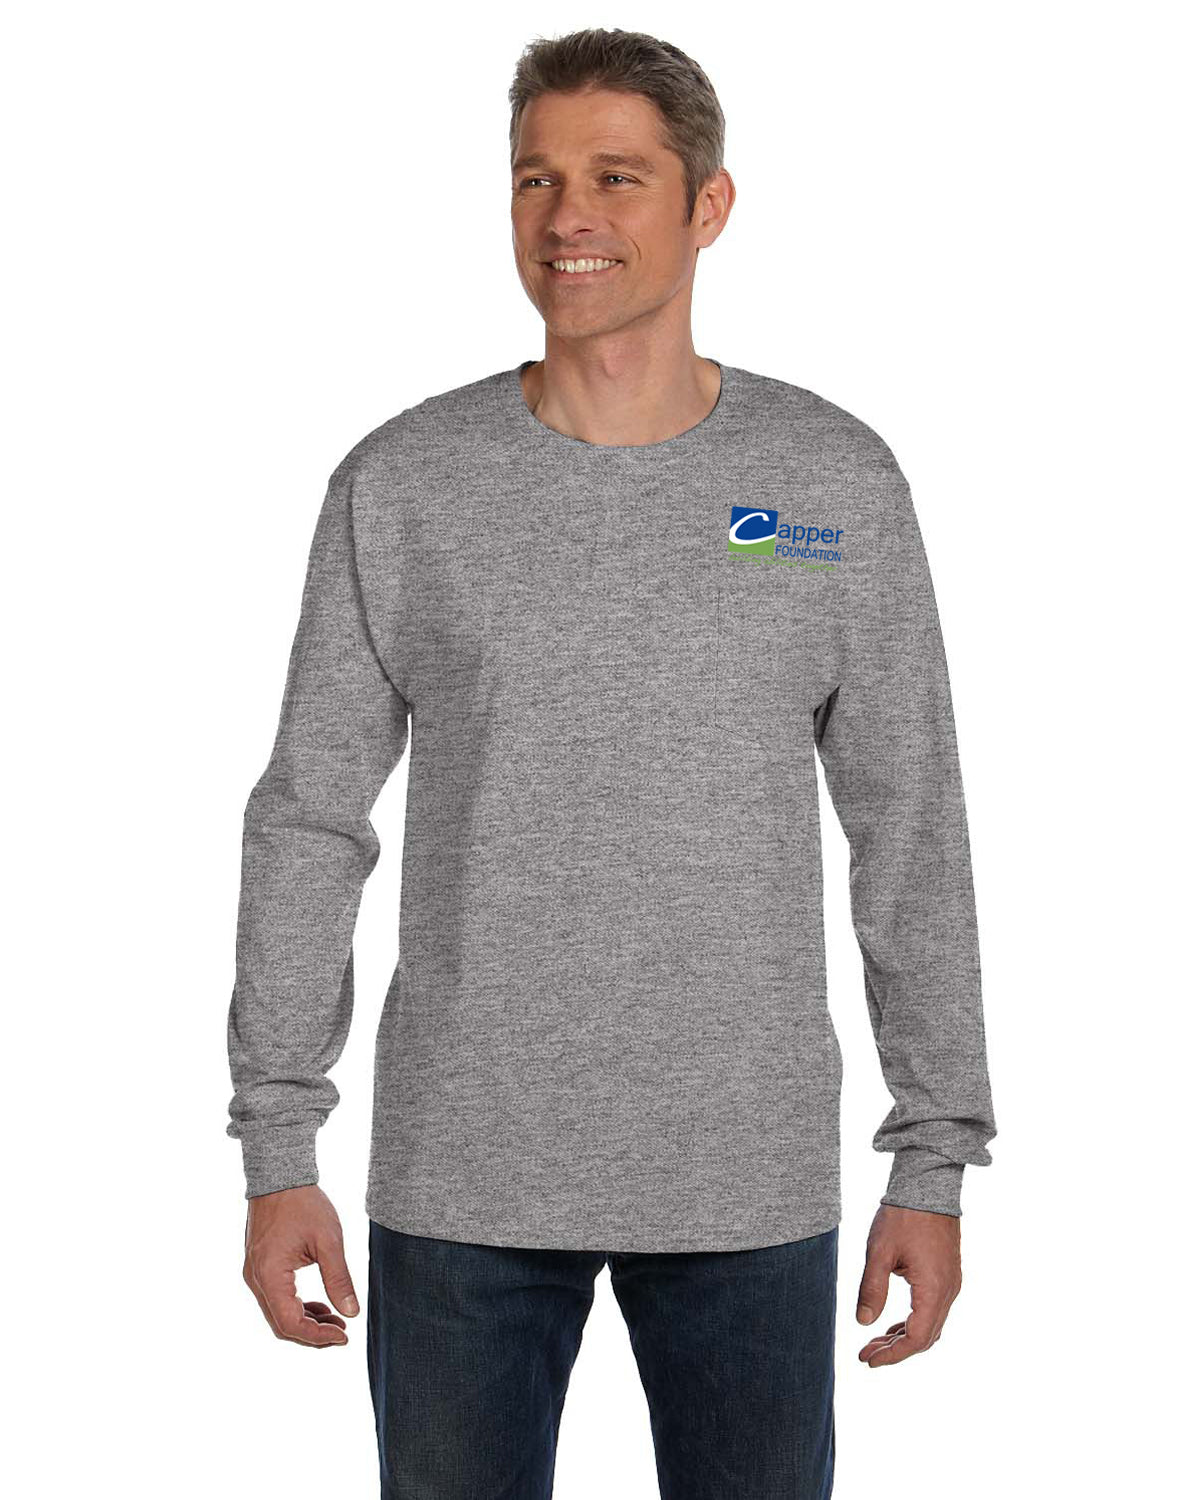 Capper Foundation - Men's Authentic-T Long-Sleeve Pocket T-Shirt - 5596